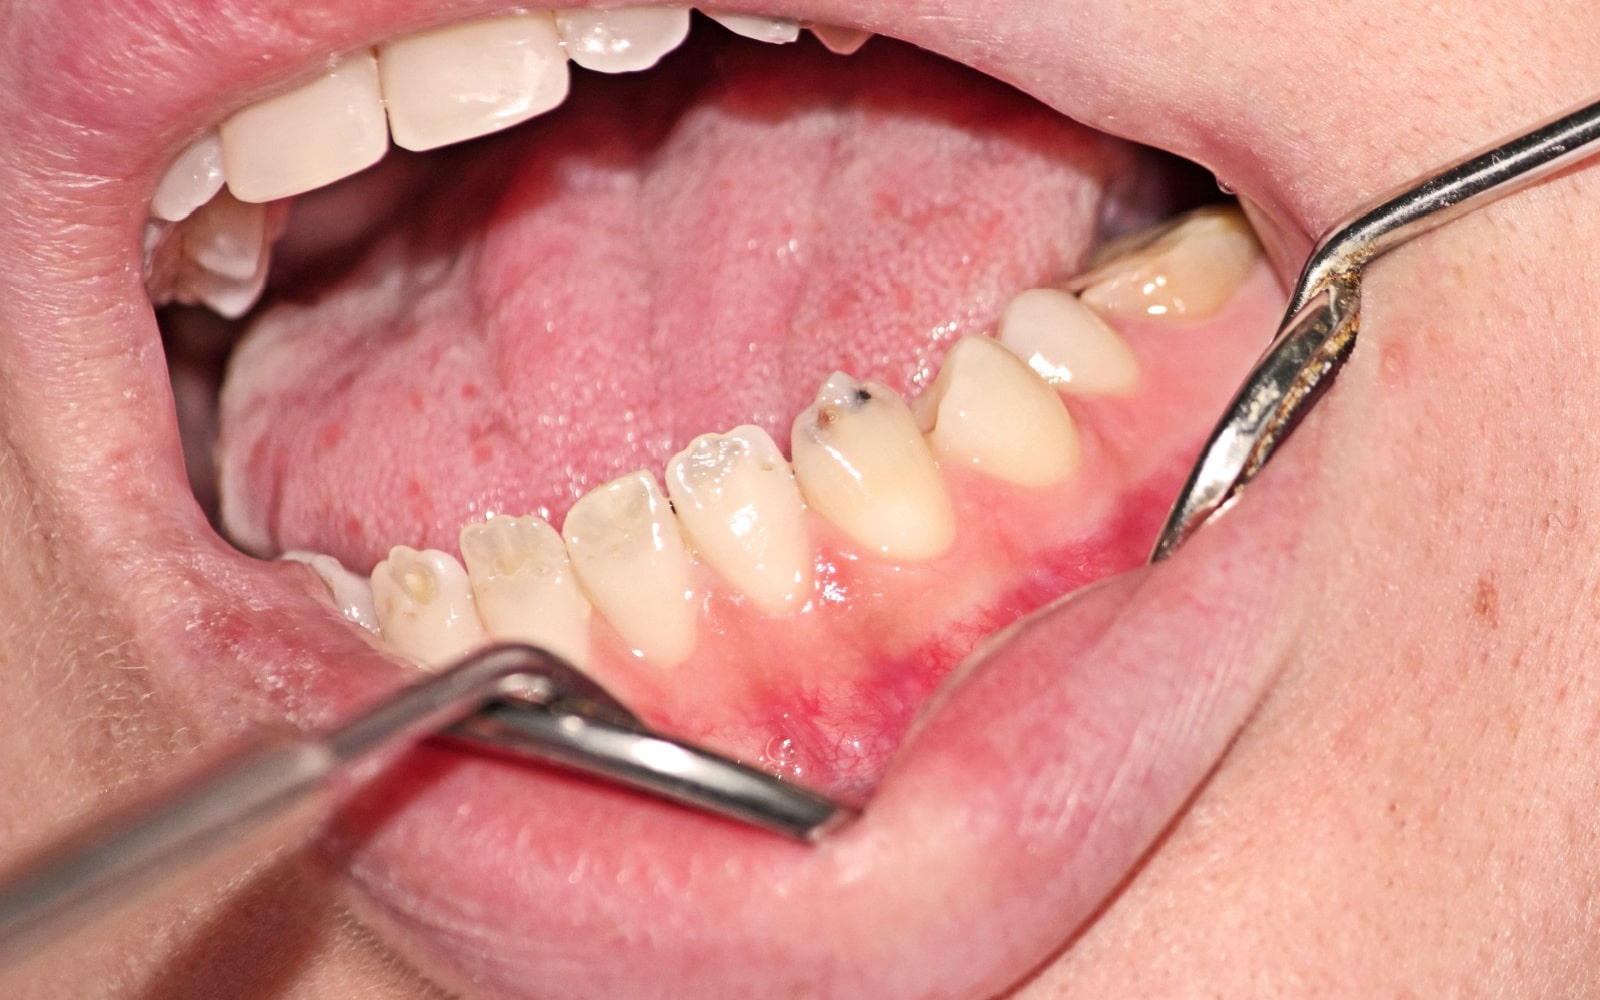 Enamel decay due to dentinogenesis imperfecta